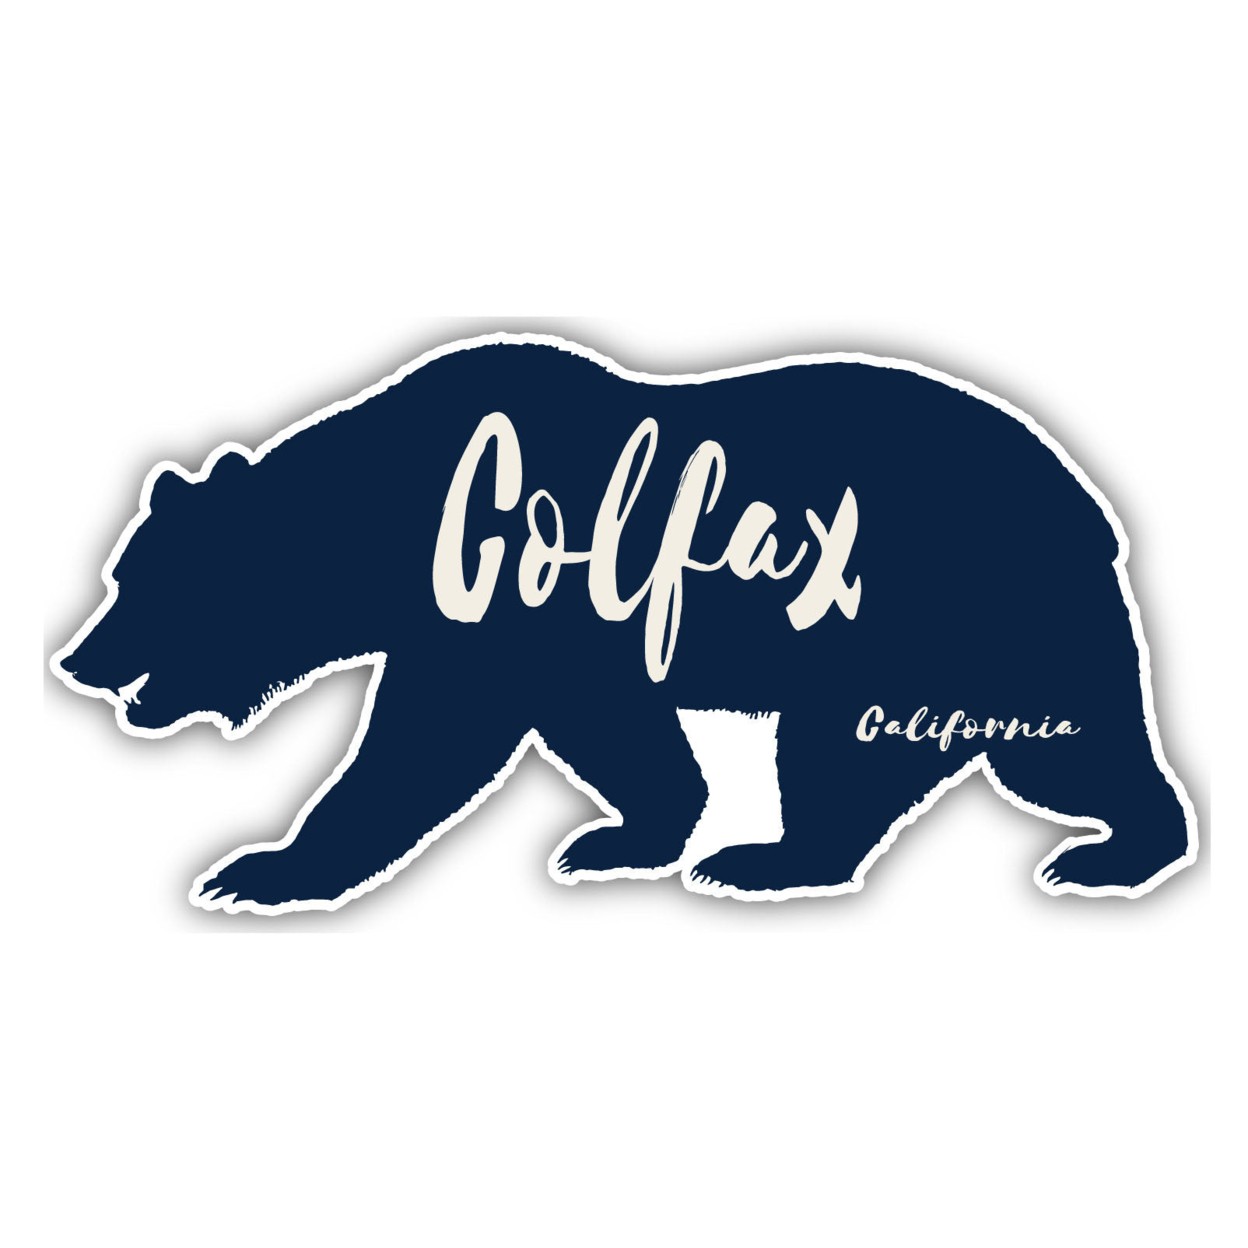 Colfax California Souvenir Decorative Stickers (Choose Theme And Size) - Single Unit, 12-Inch, Bear